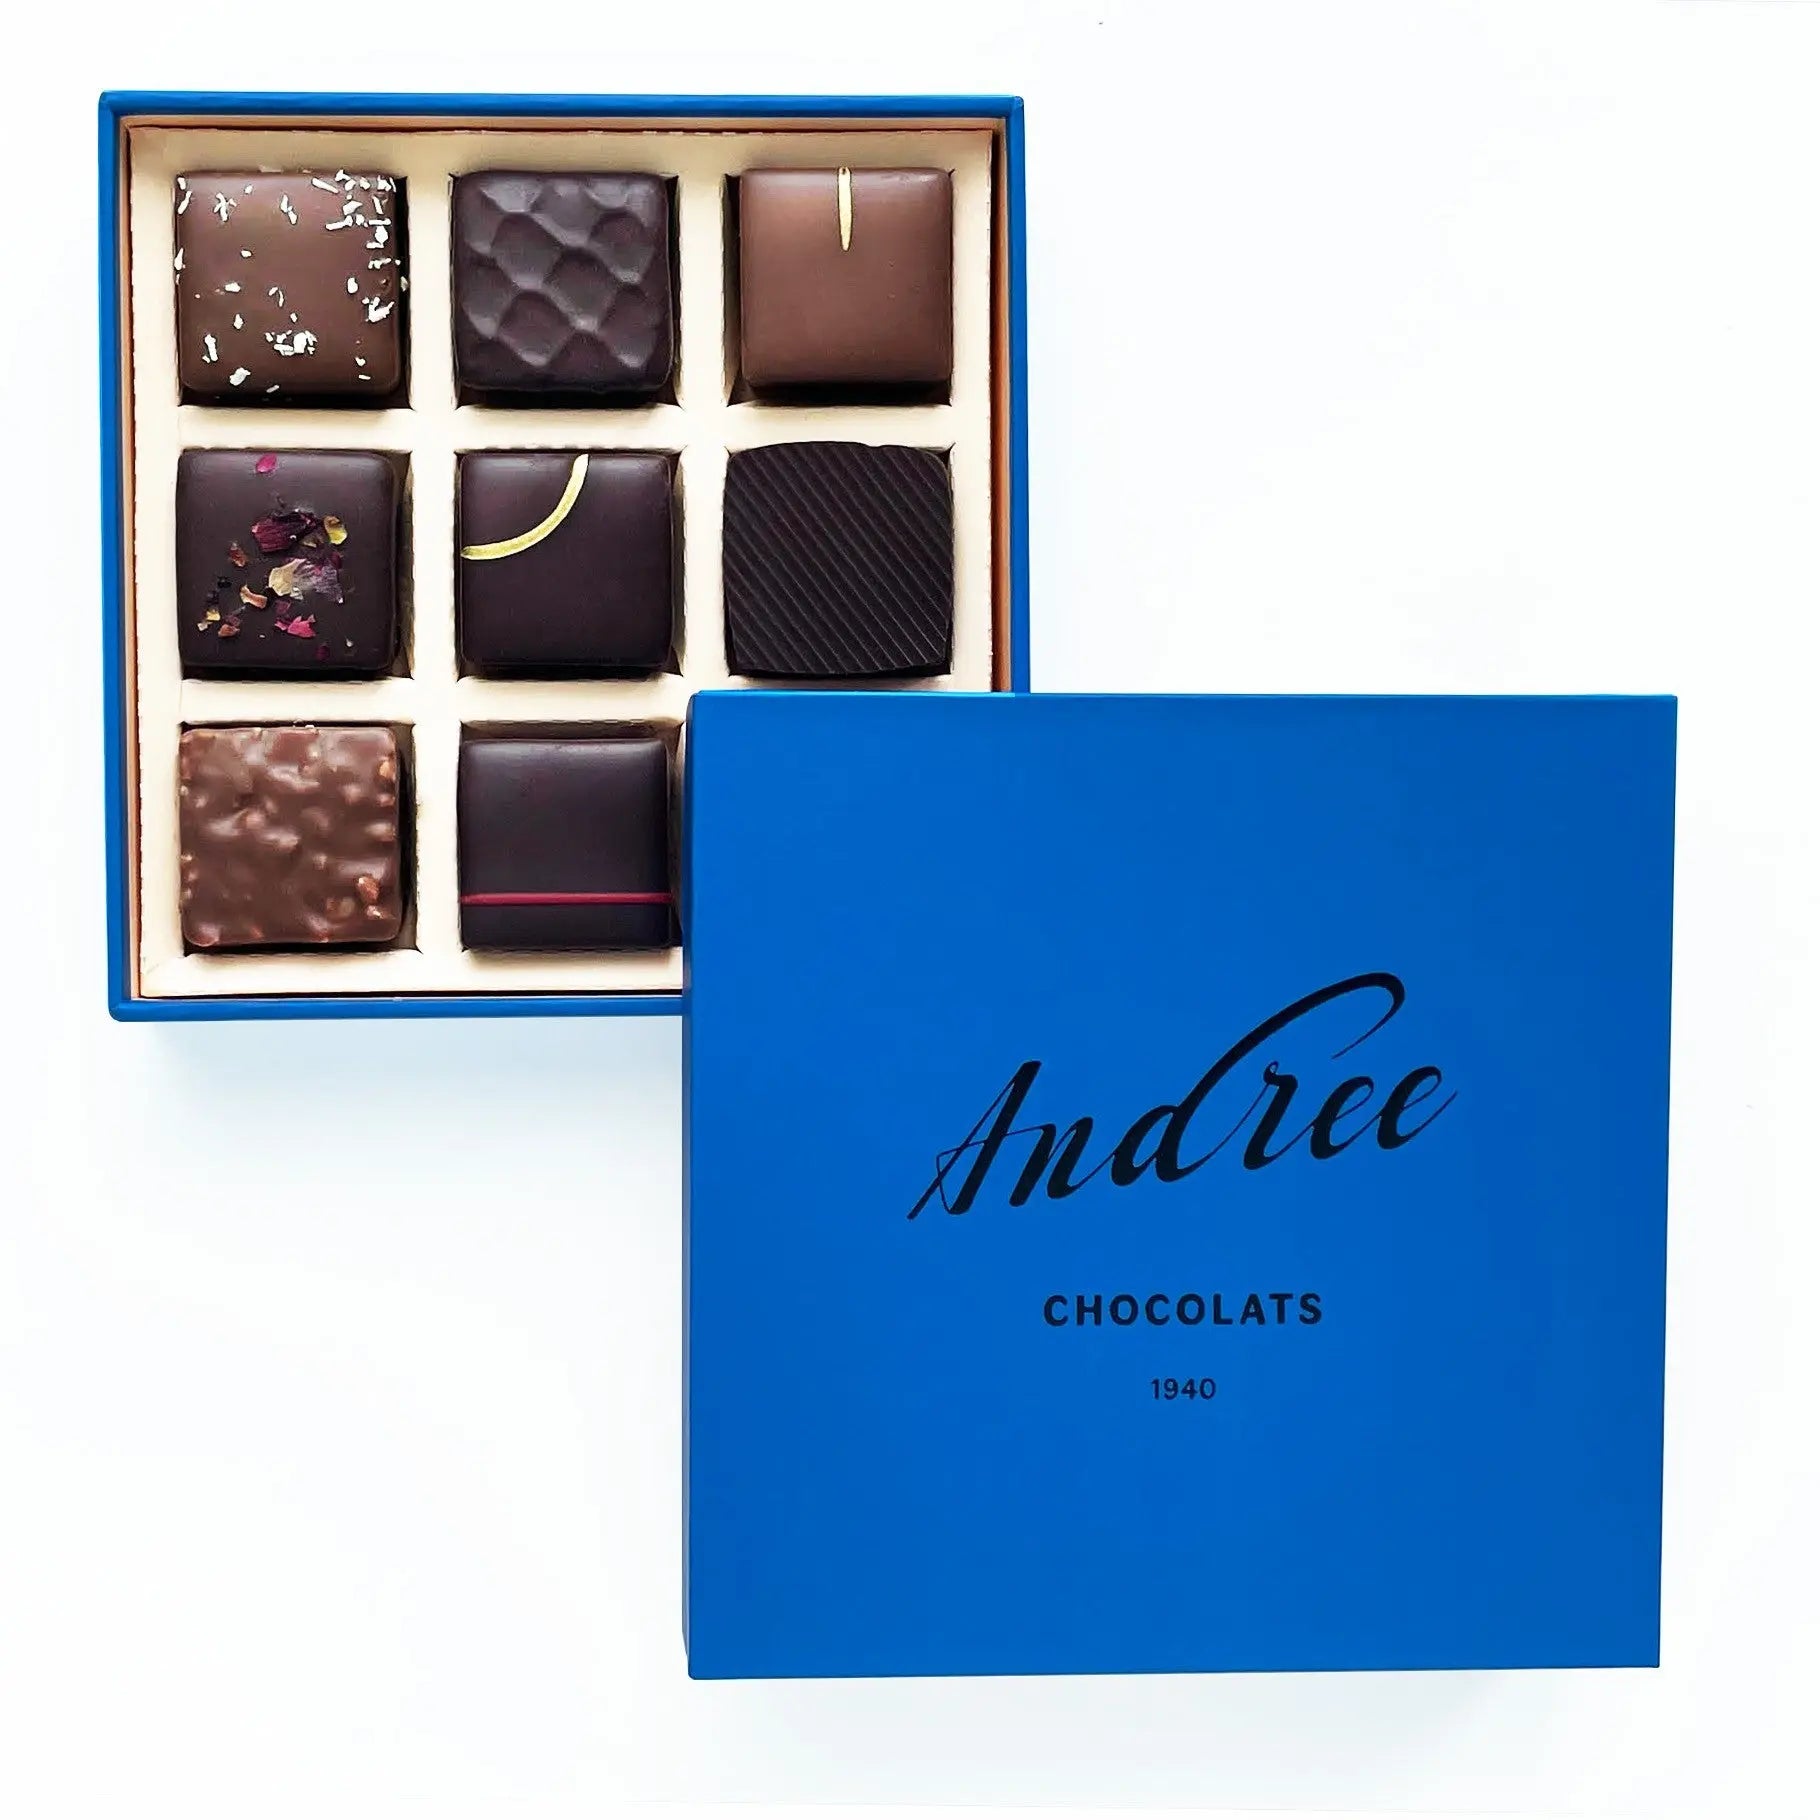 Coffret Noël - Chocolats Andrée